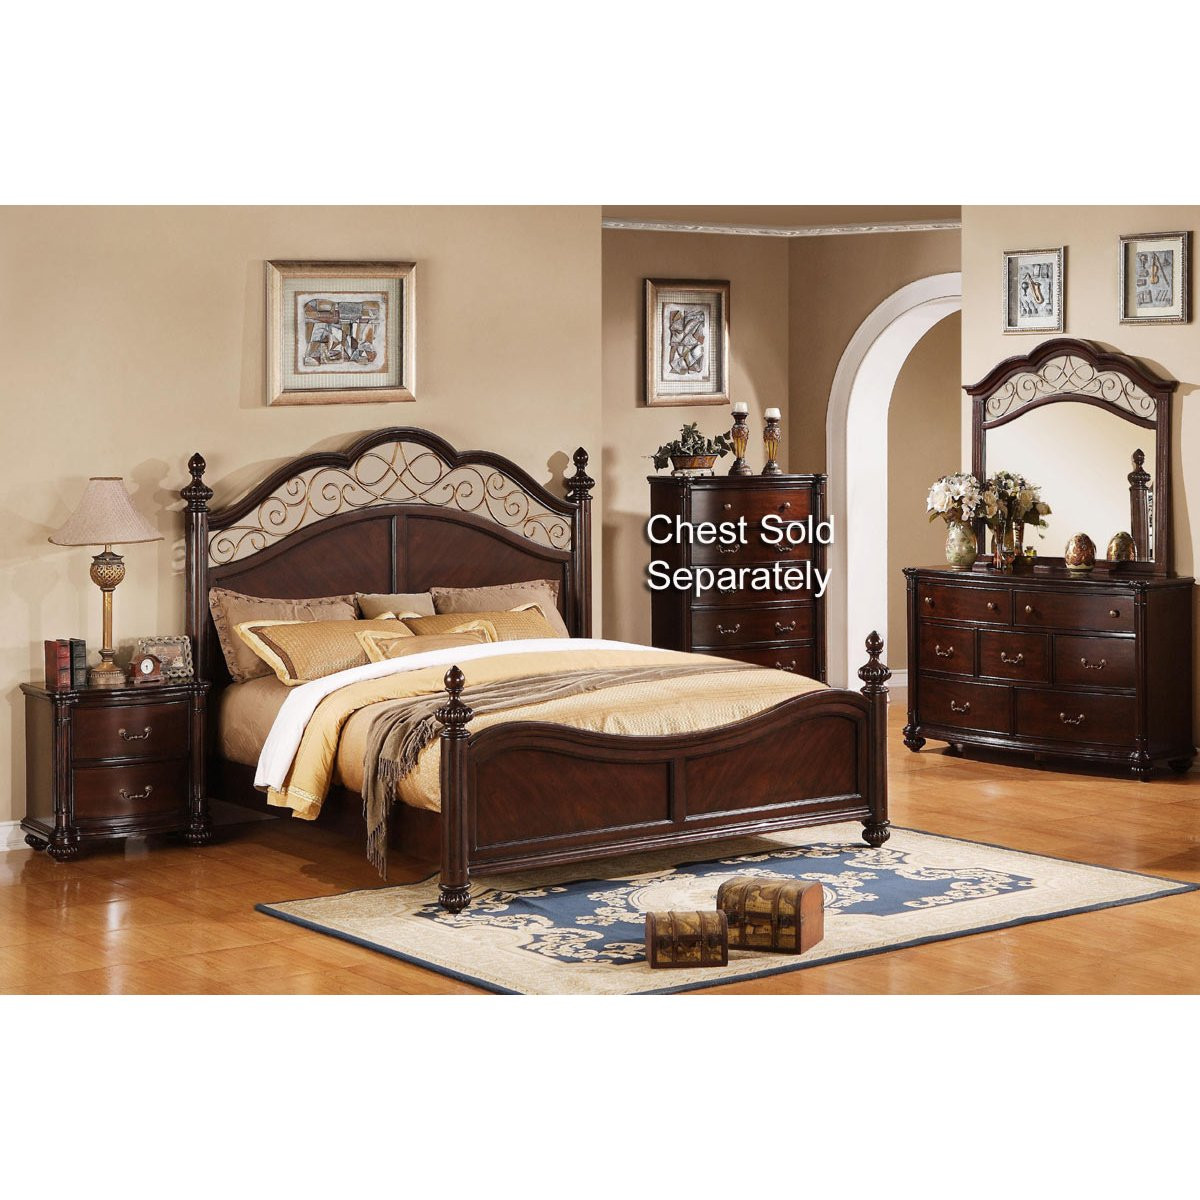 Best ideas about Queen Bedroom Set
. Save or Pin Derbyshire International Furniture 6 Piece Queen Bedroom Set Now.